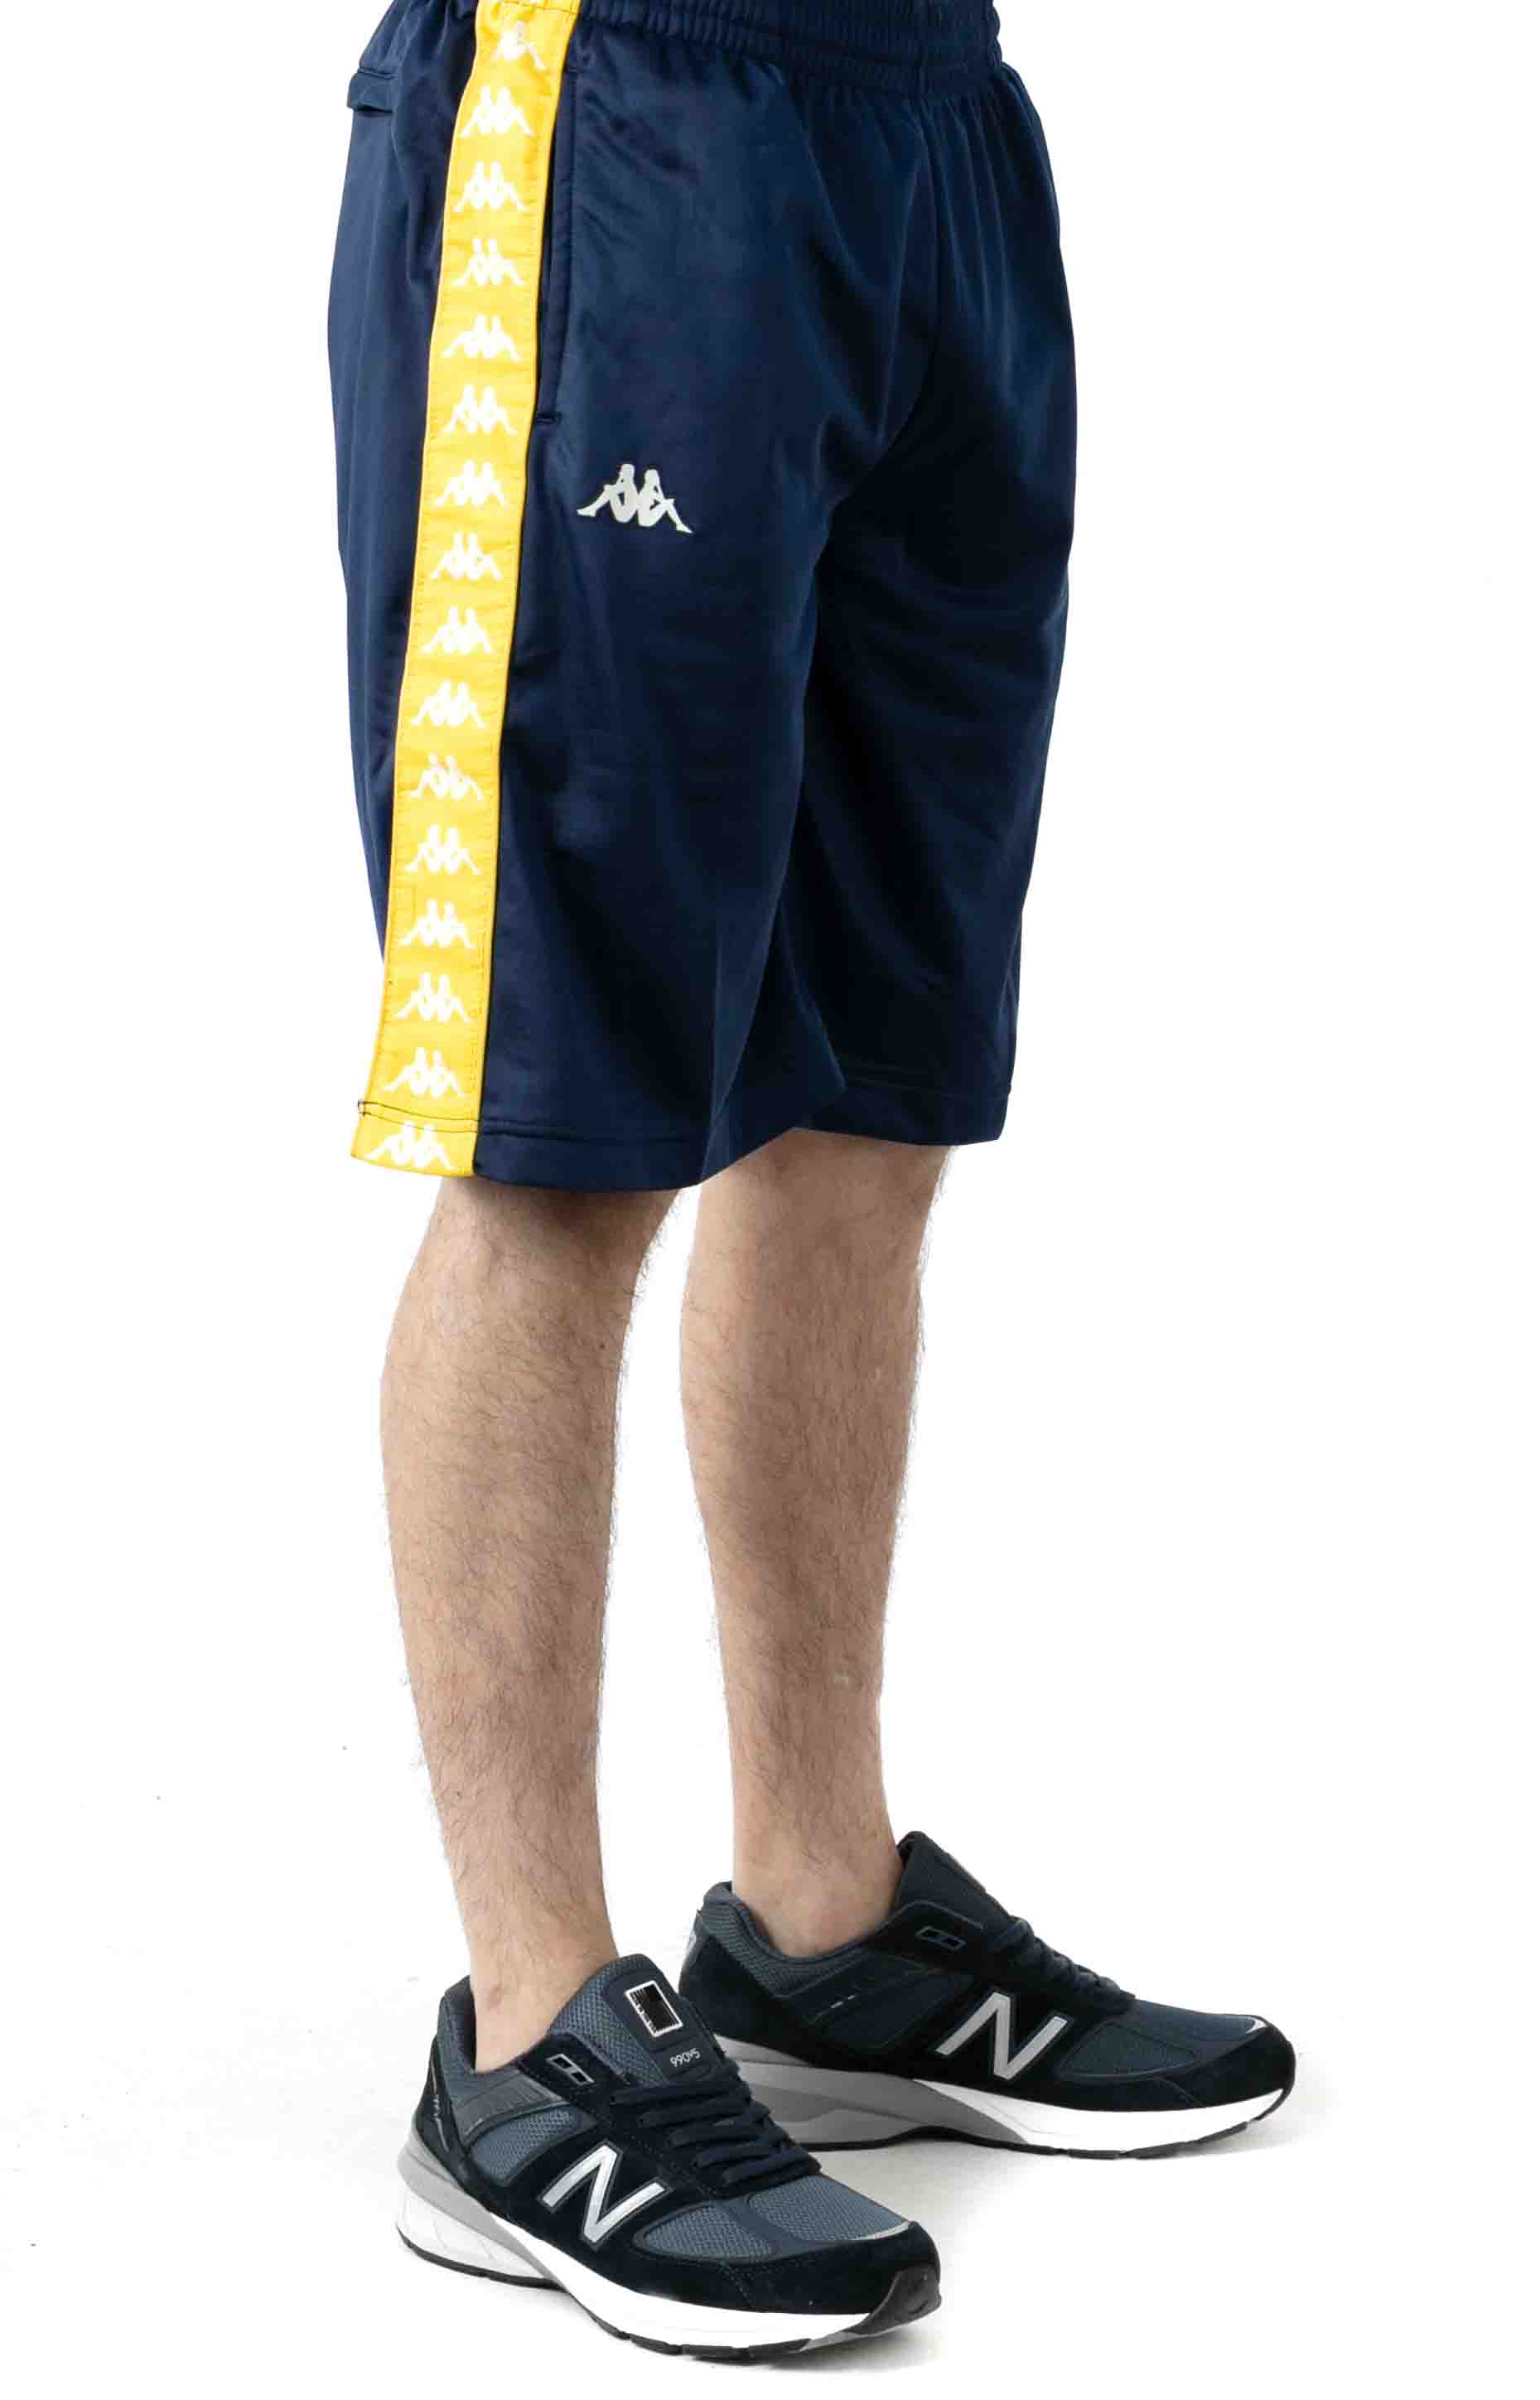 222 Banda Treadwellz Shorts - Blue Mid/Yellow